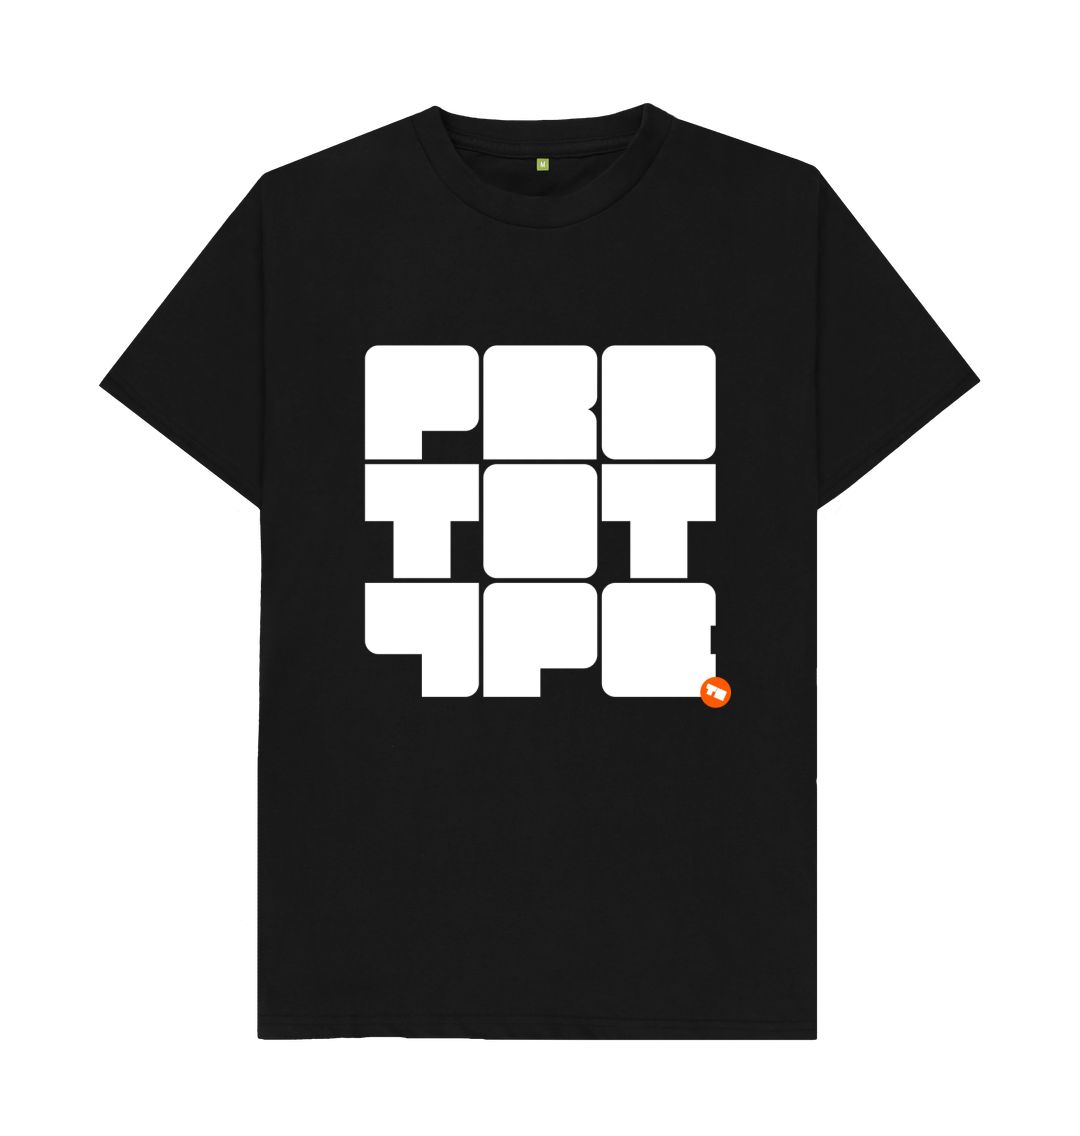 Black PrototypeTM T-shirts